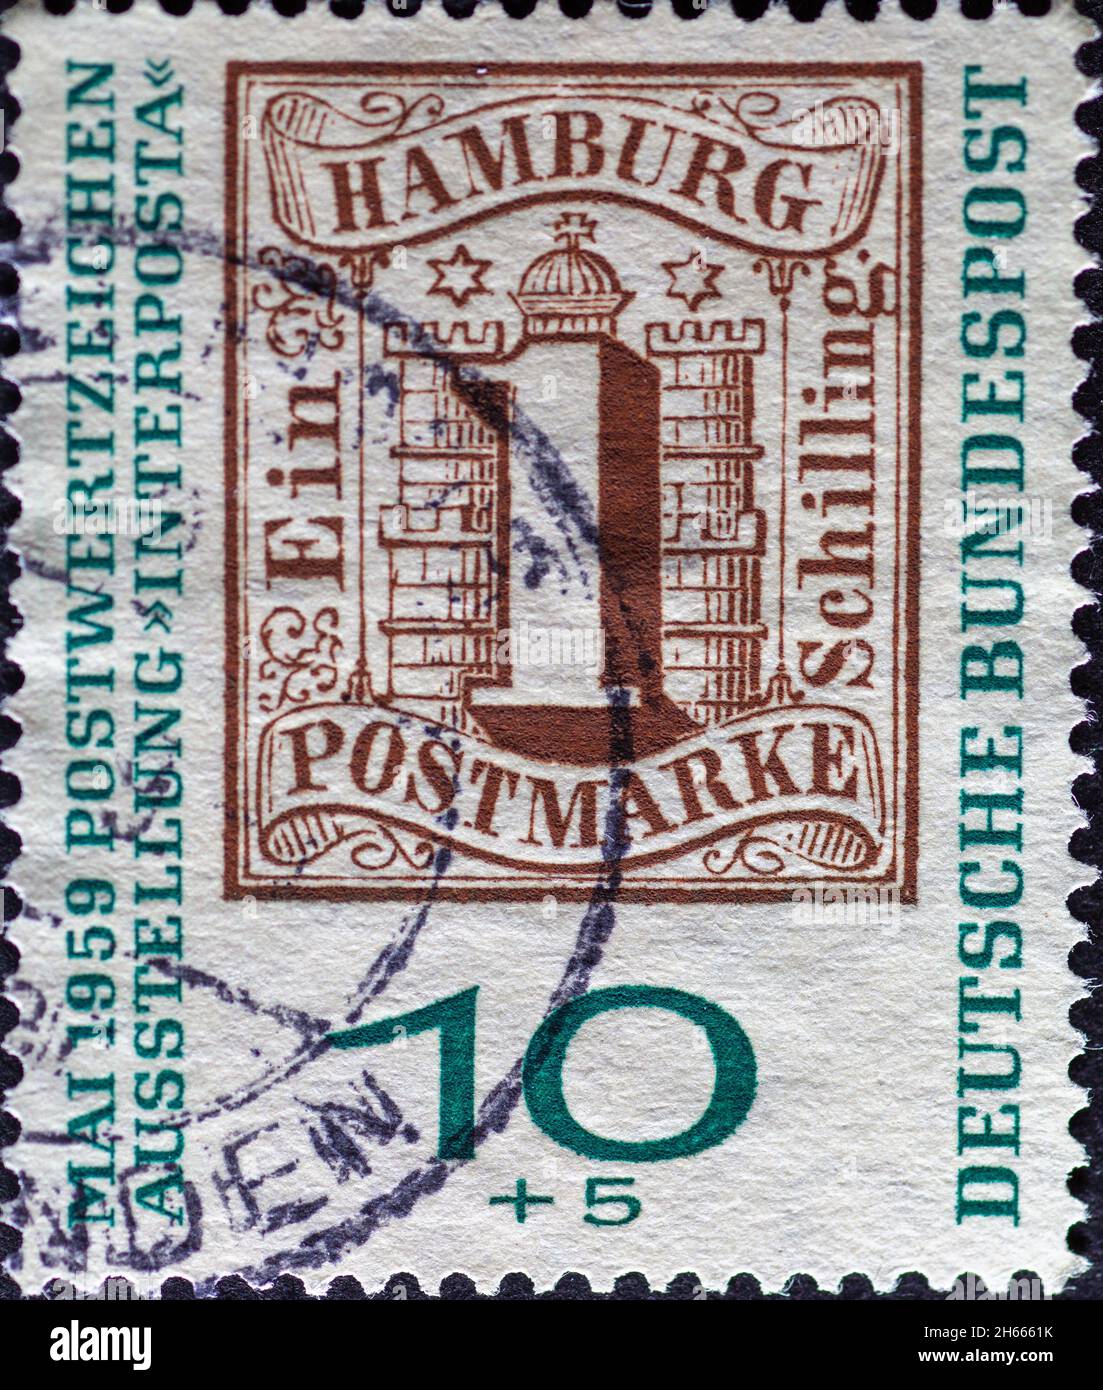 Hamburg City Post - stamps 19th century (de labeled) - PICRYL - Public  Domain Media Search Engine Public Domain Search